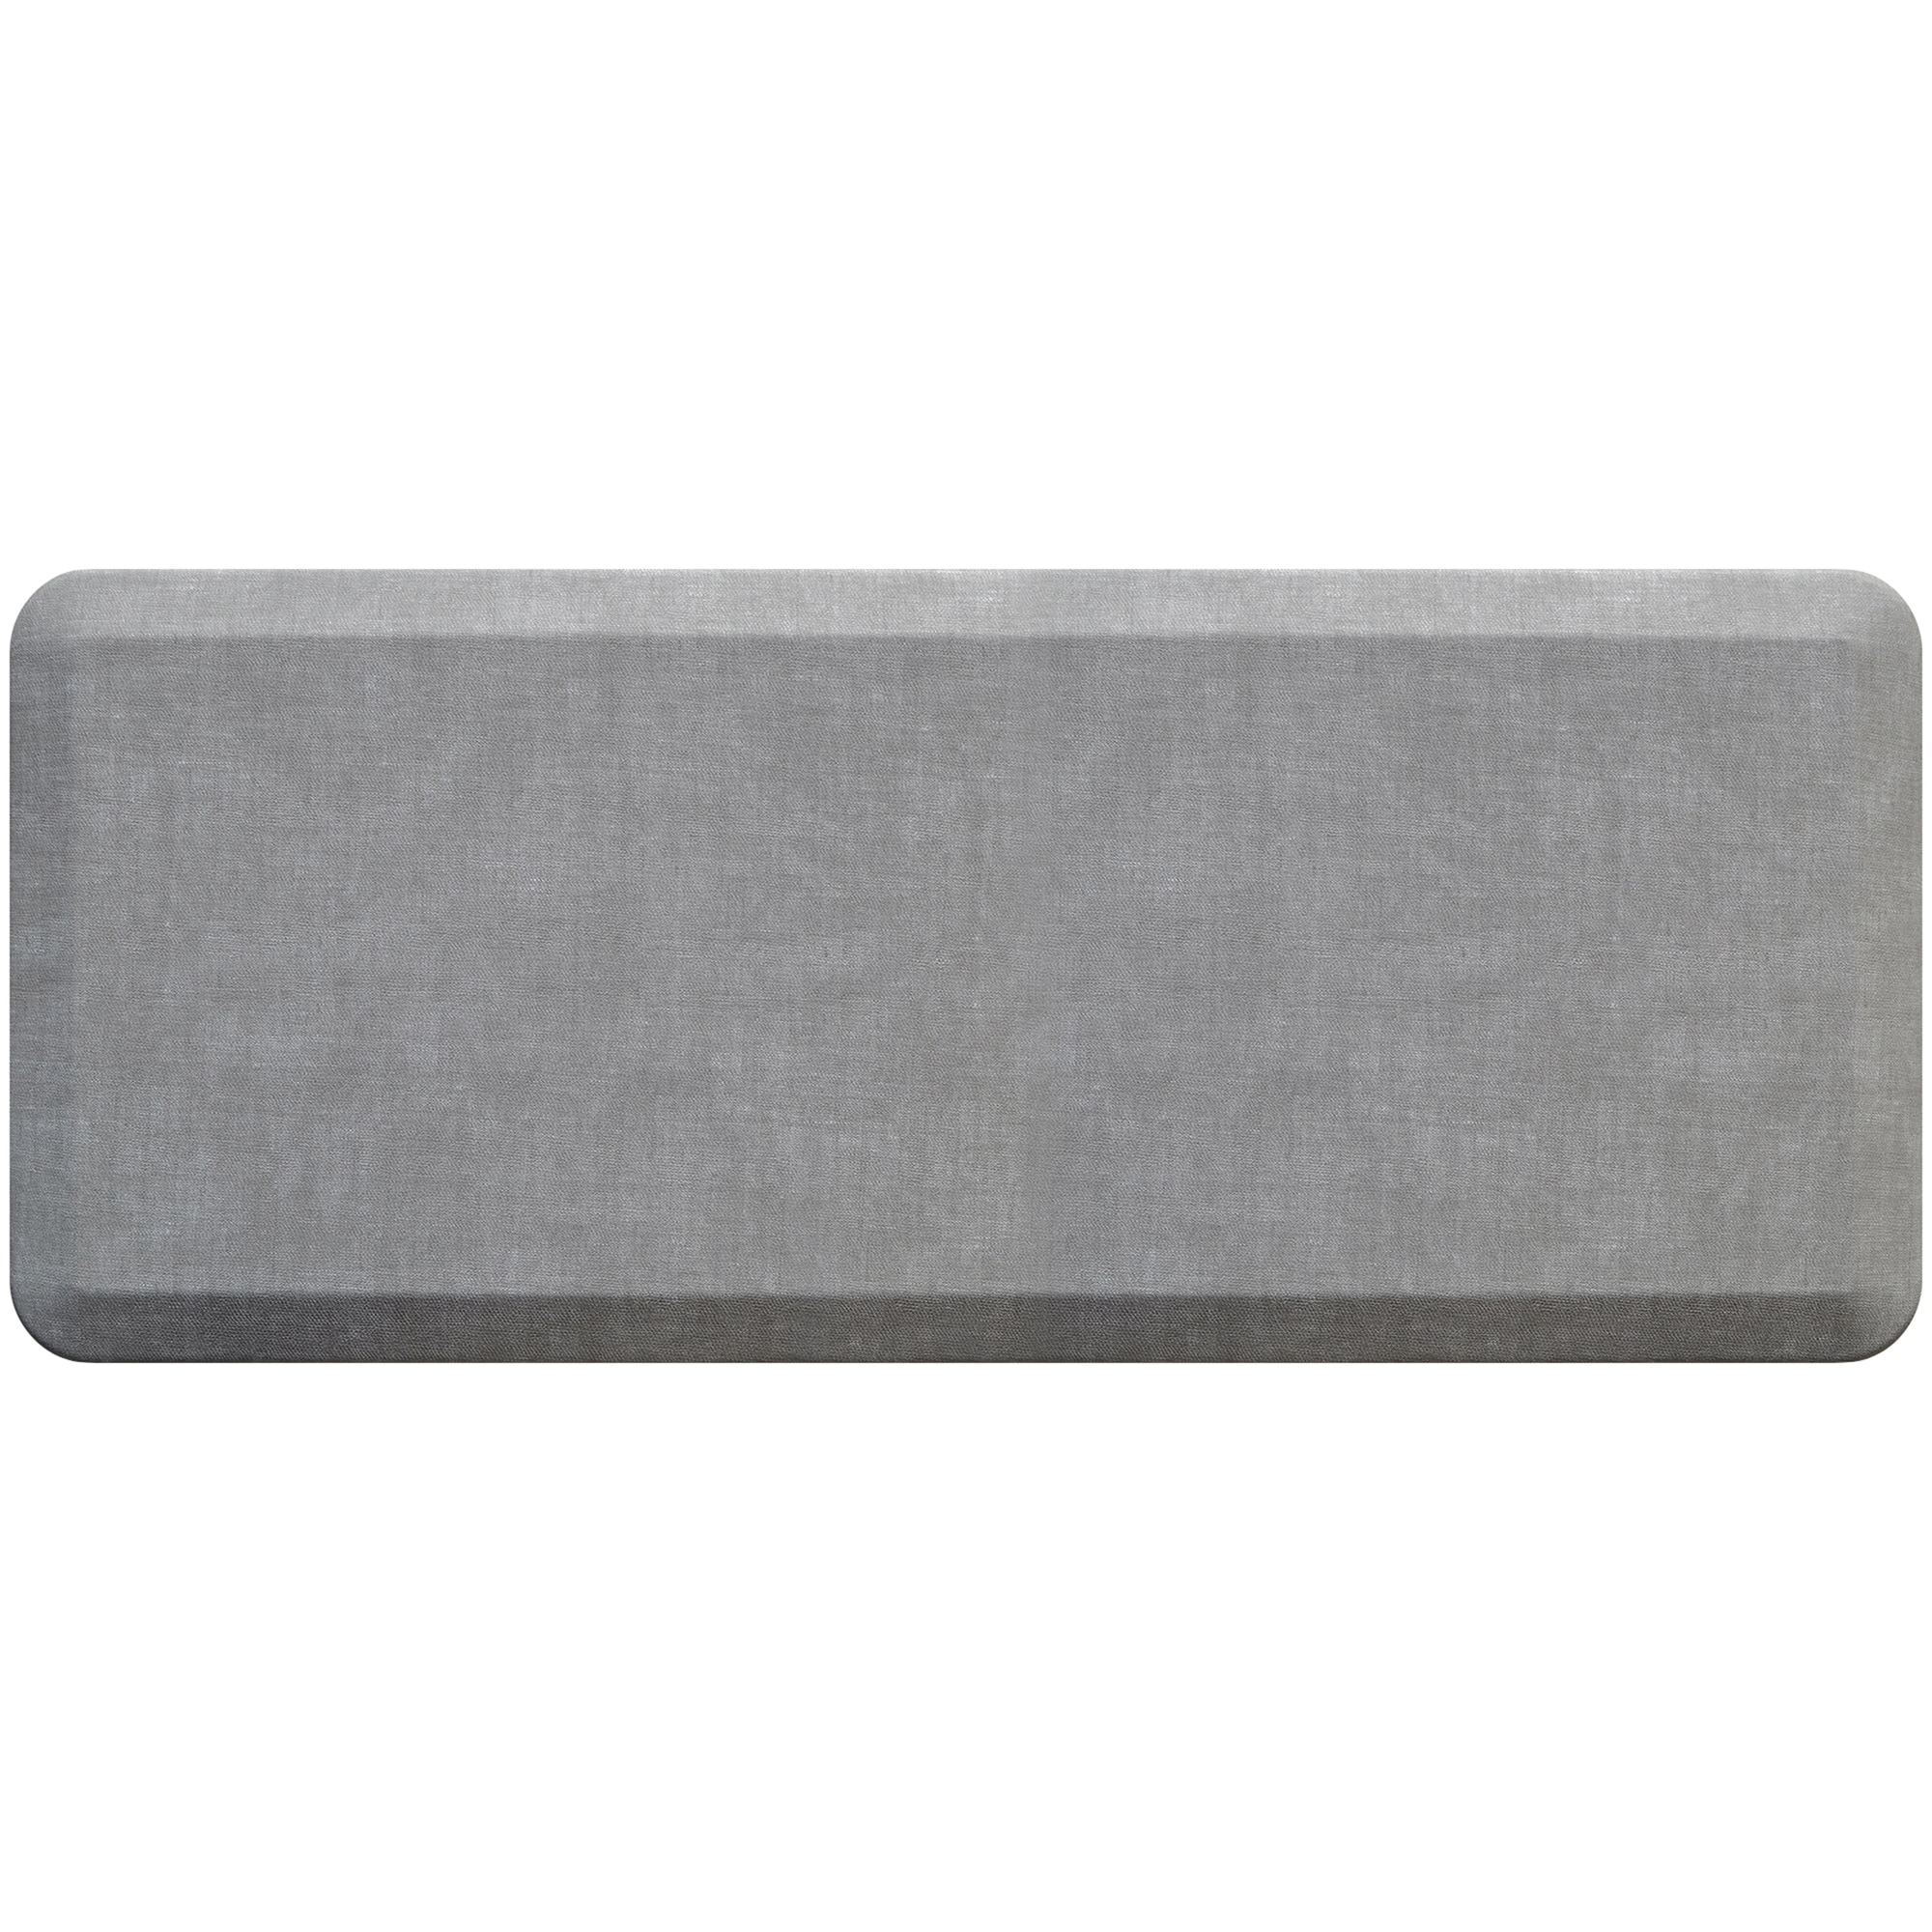 GelPro 2-ft x 3-ft Granite Rectangular Indoor Decorative Anti-Fatigue Mat in Gray | 106-37-2032-4